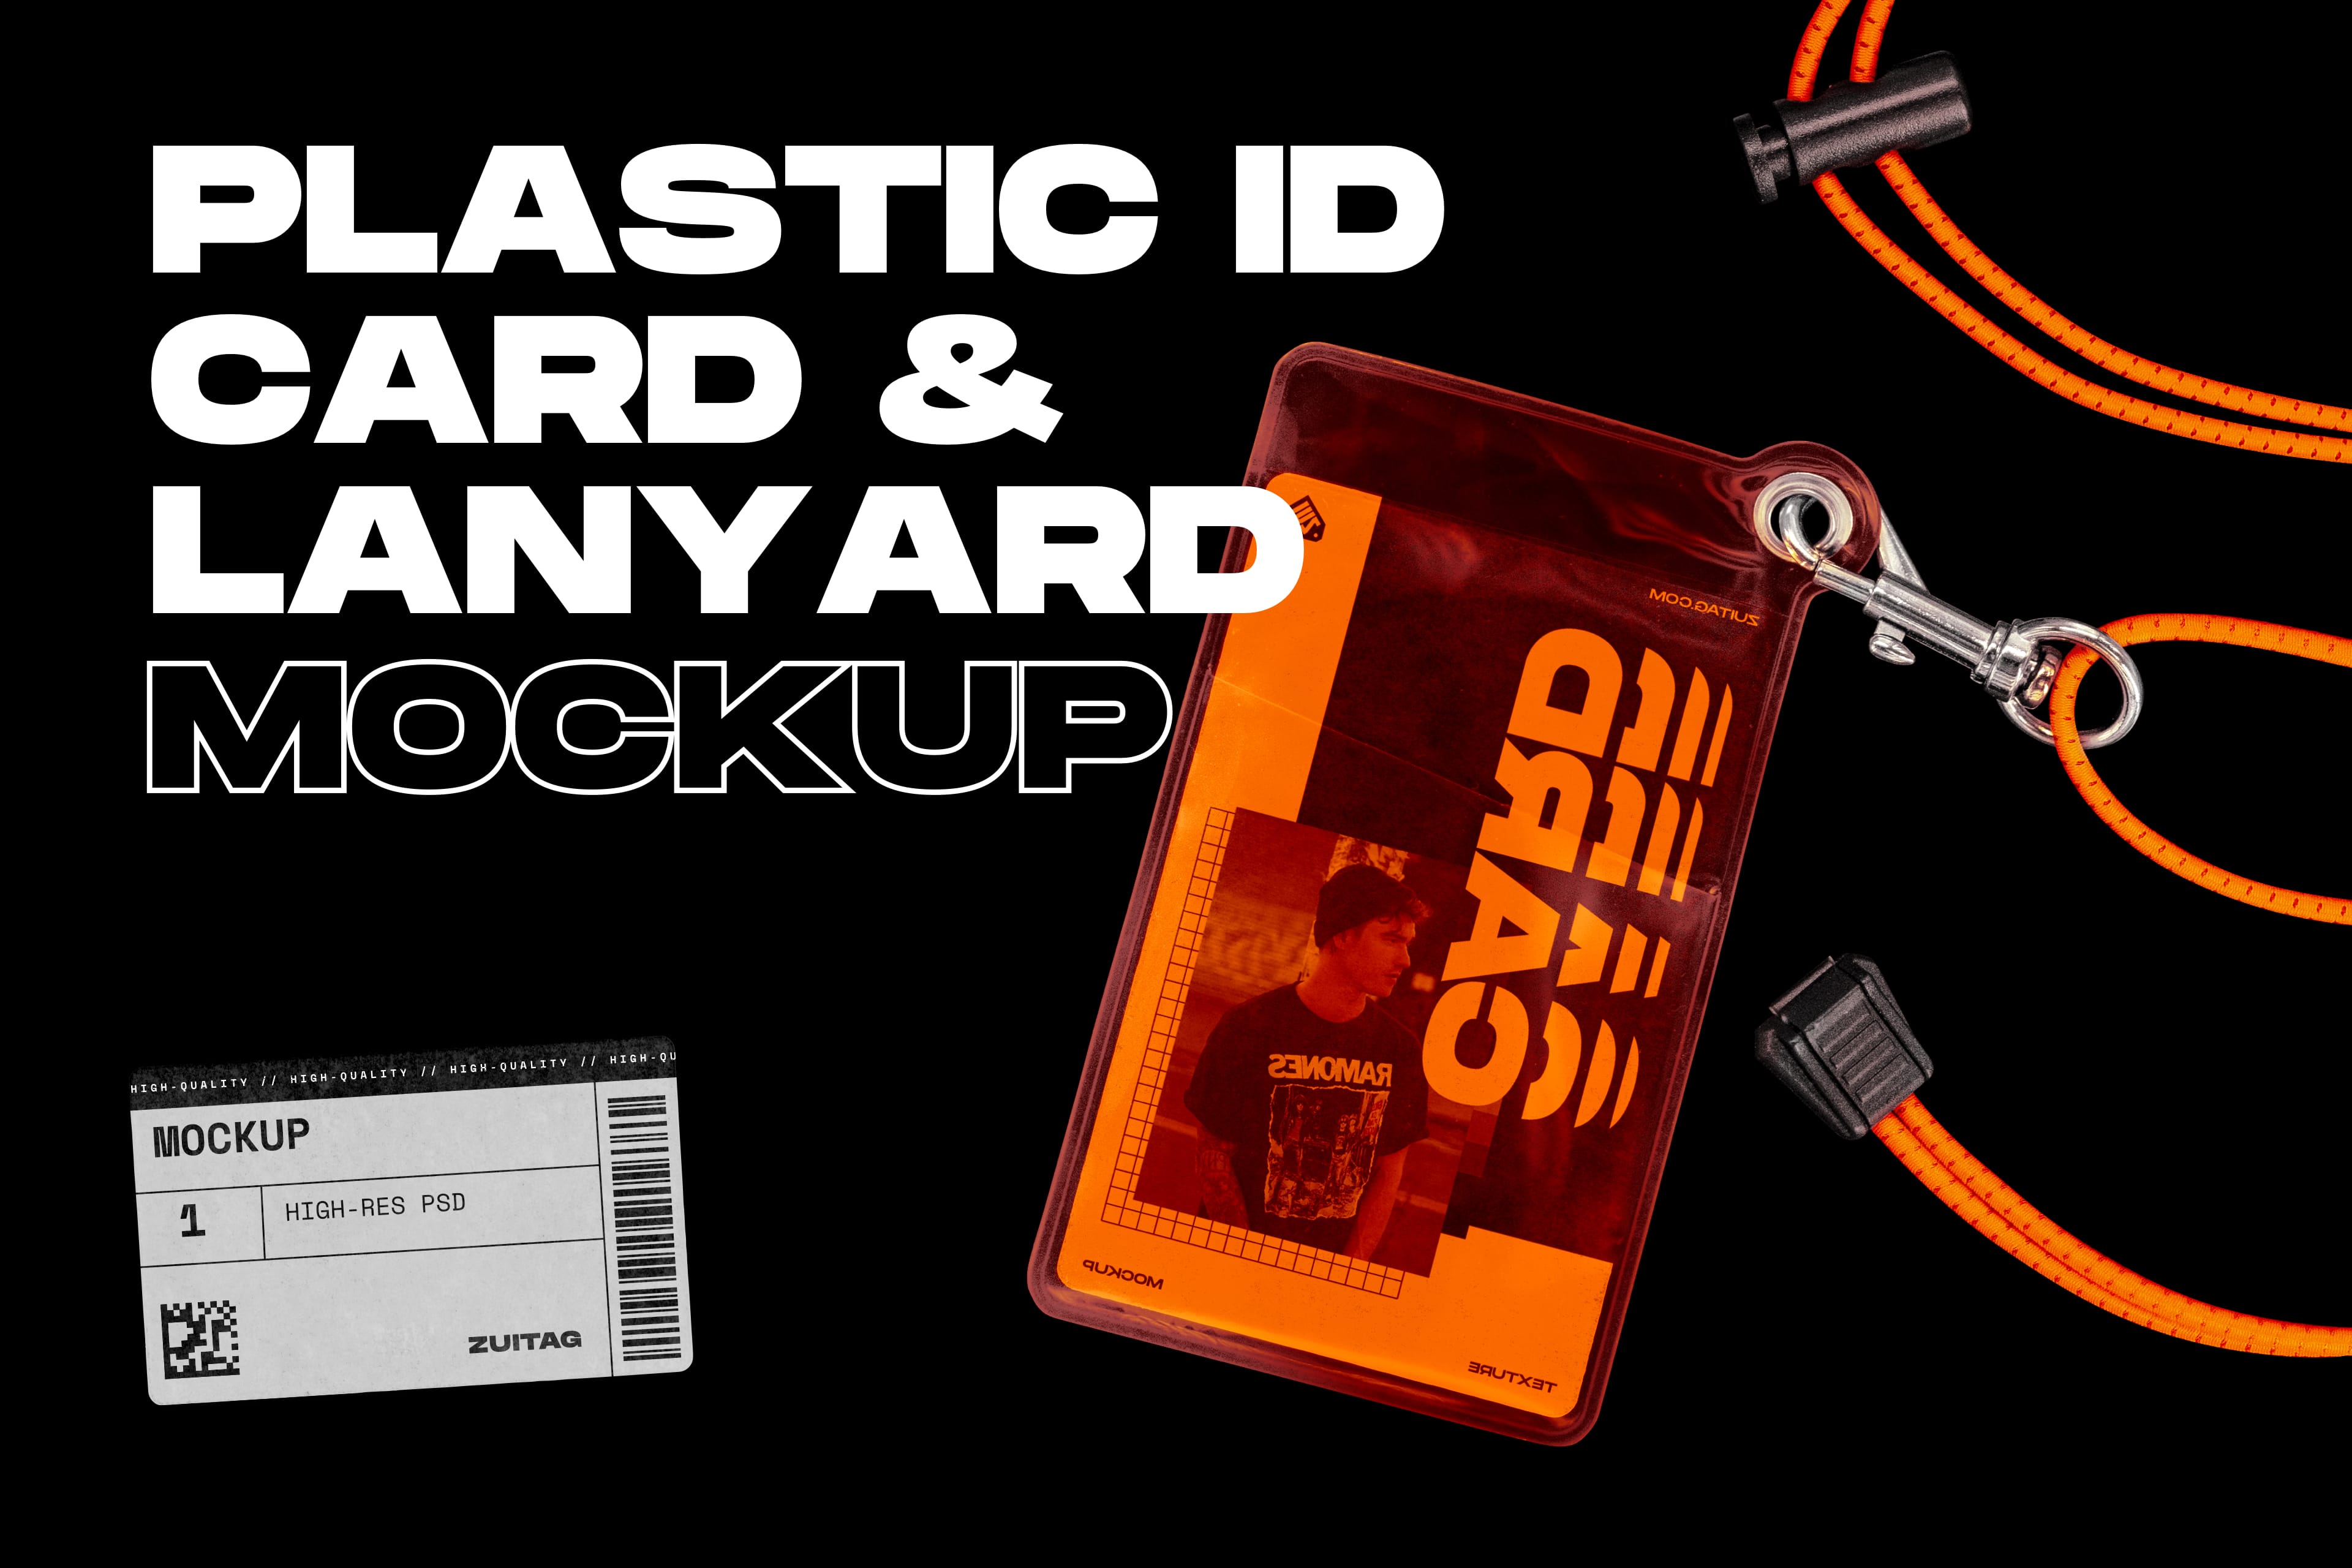 塑料身份证和挂绳样机 PLASTIC ID CARD AND LANYARD MOCKUP 样机素材 第1张